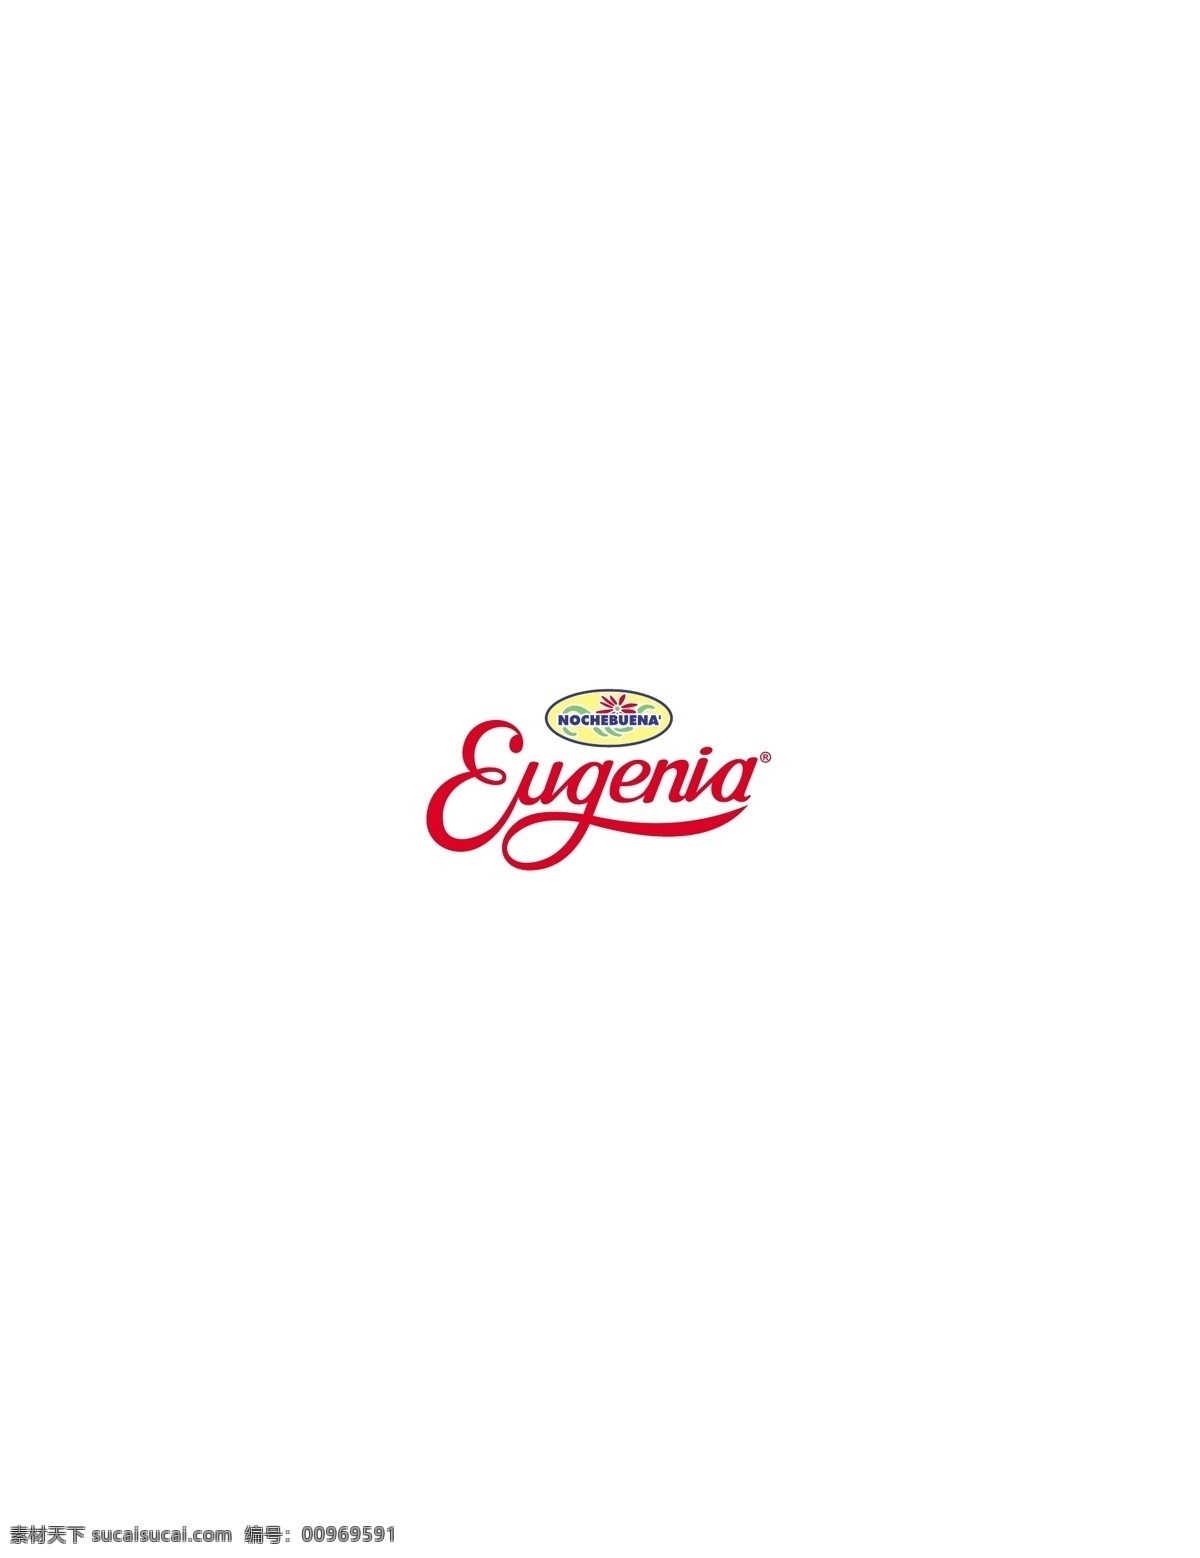 eugenia logo大全 logo 设计欣赏 商业矢量 矢量下载 名牌 饮料 标志 标志设计 欣赏 网页矢量 矢量图 其他矢量图